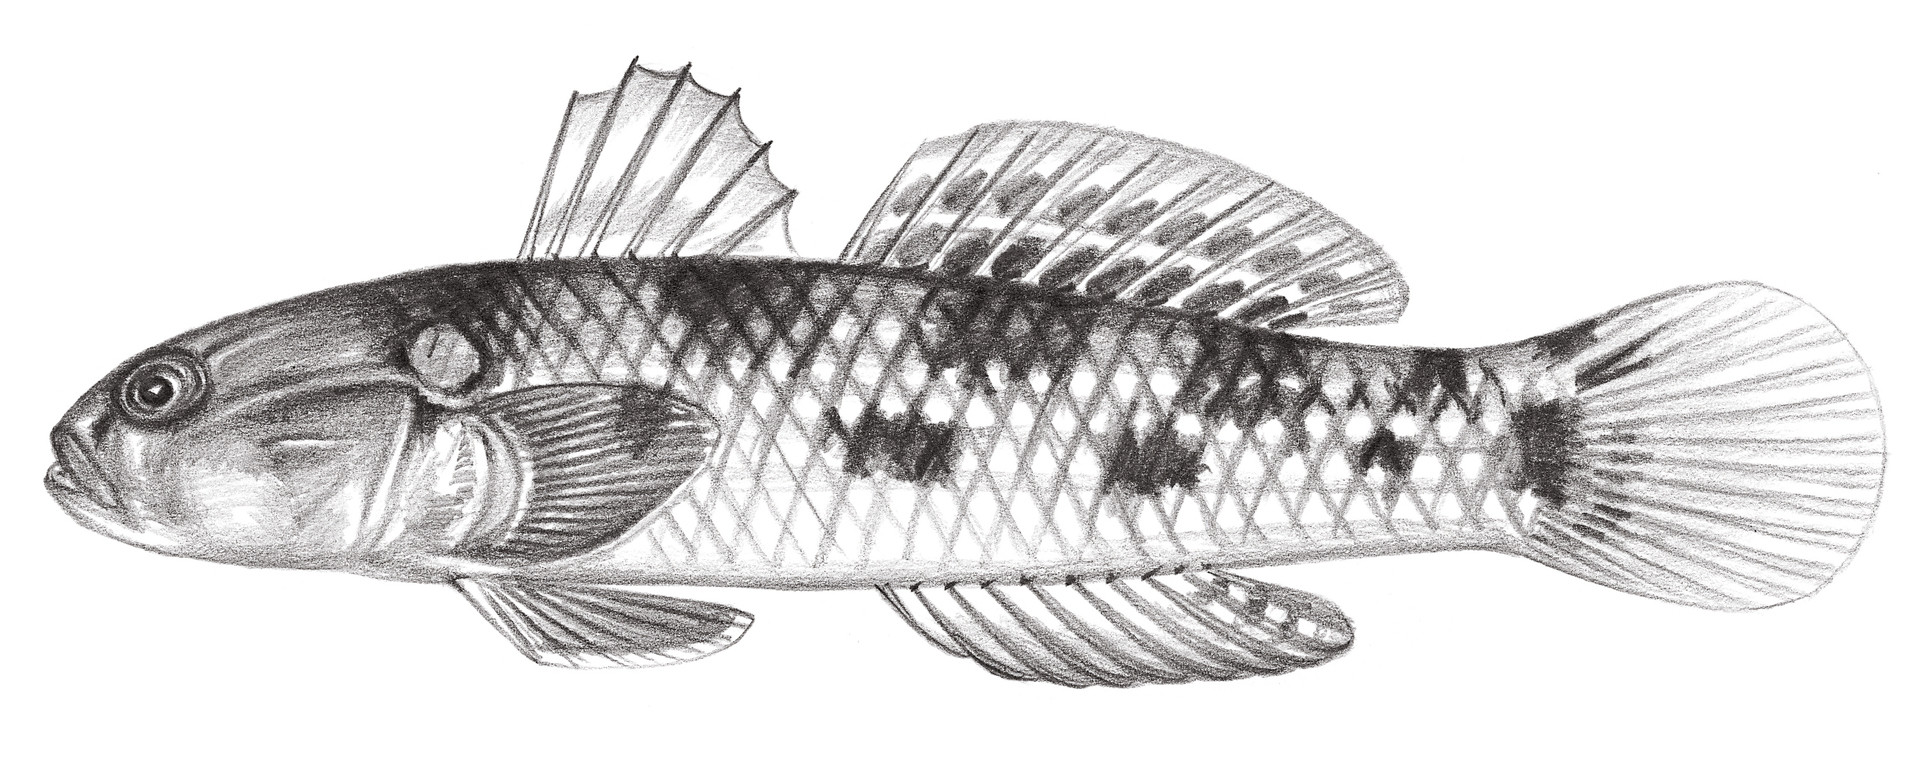 2242.	犬齒裸頰鰕虎 Yongeichthys caninus (Valenciennes, 1837)